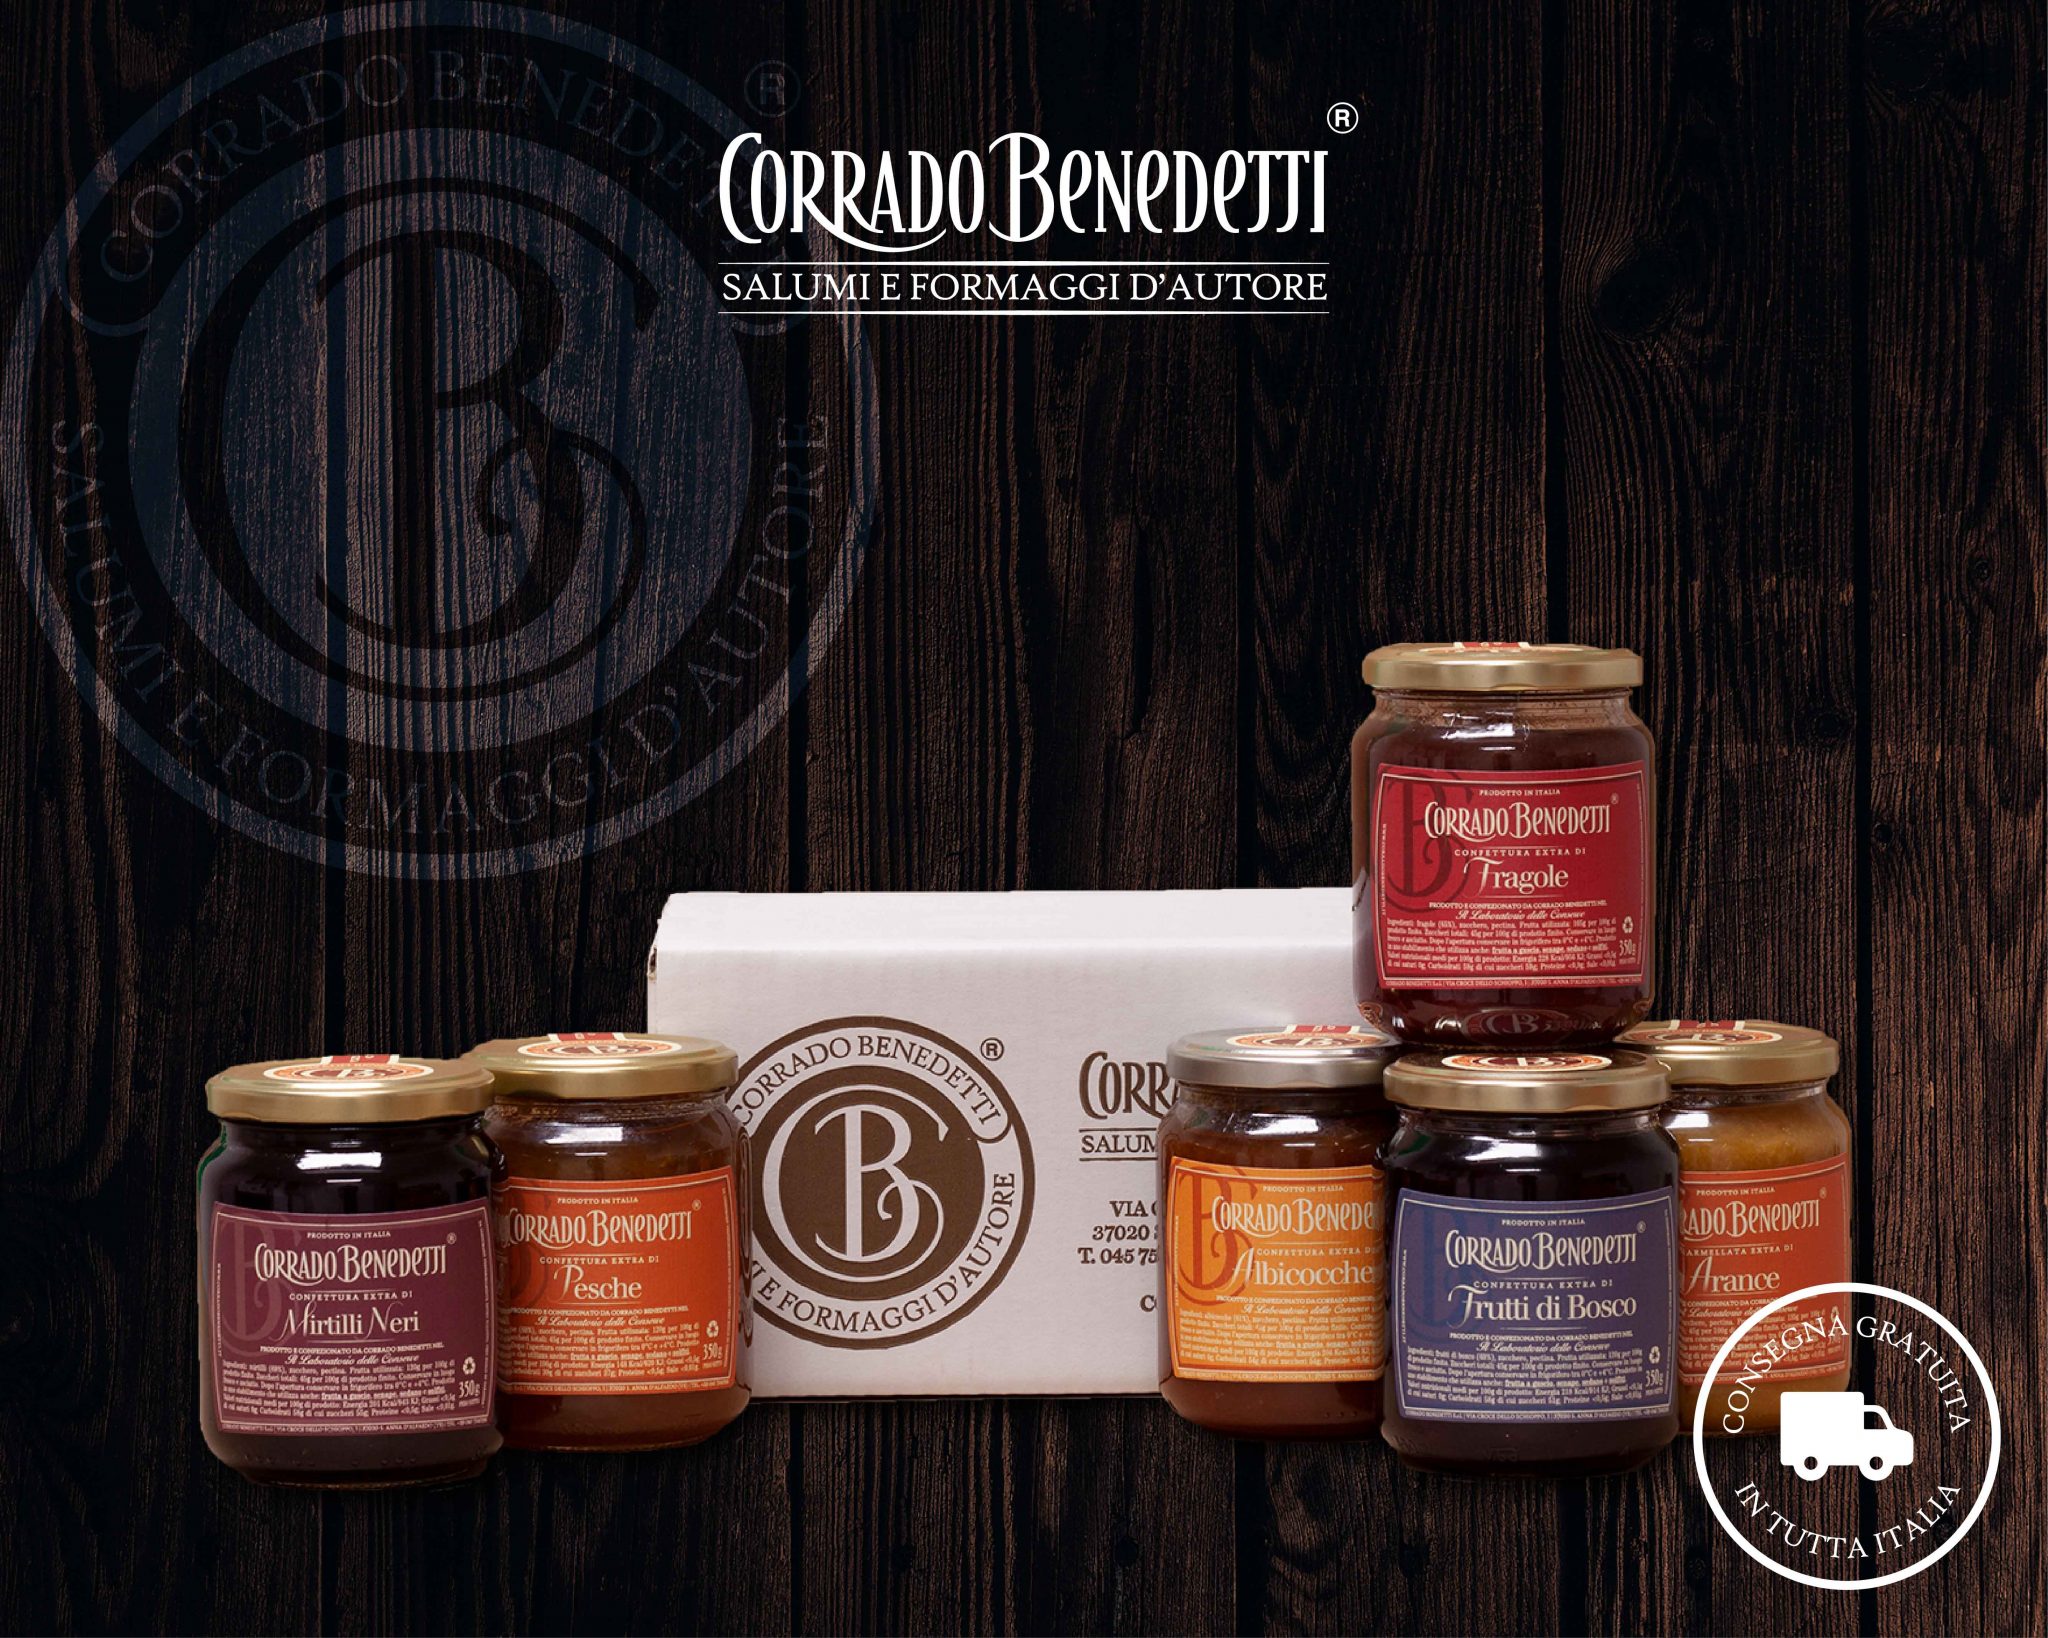 Sladké kvalitní italské džemy, marmelády a medy od značky Corrado Benedetti 